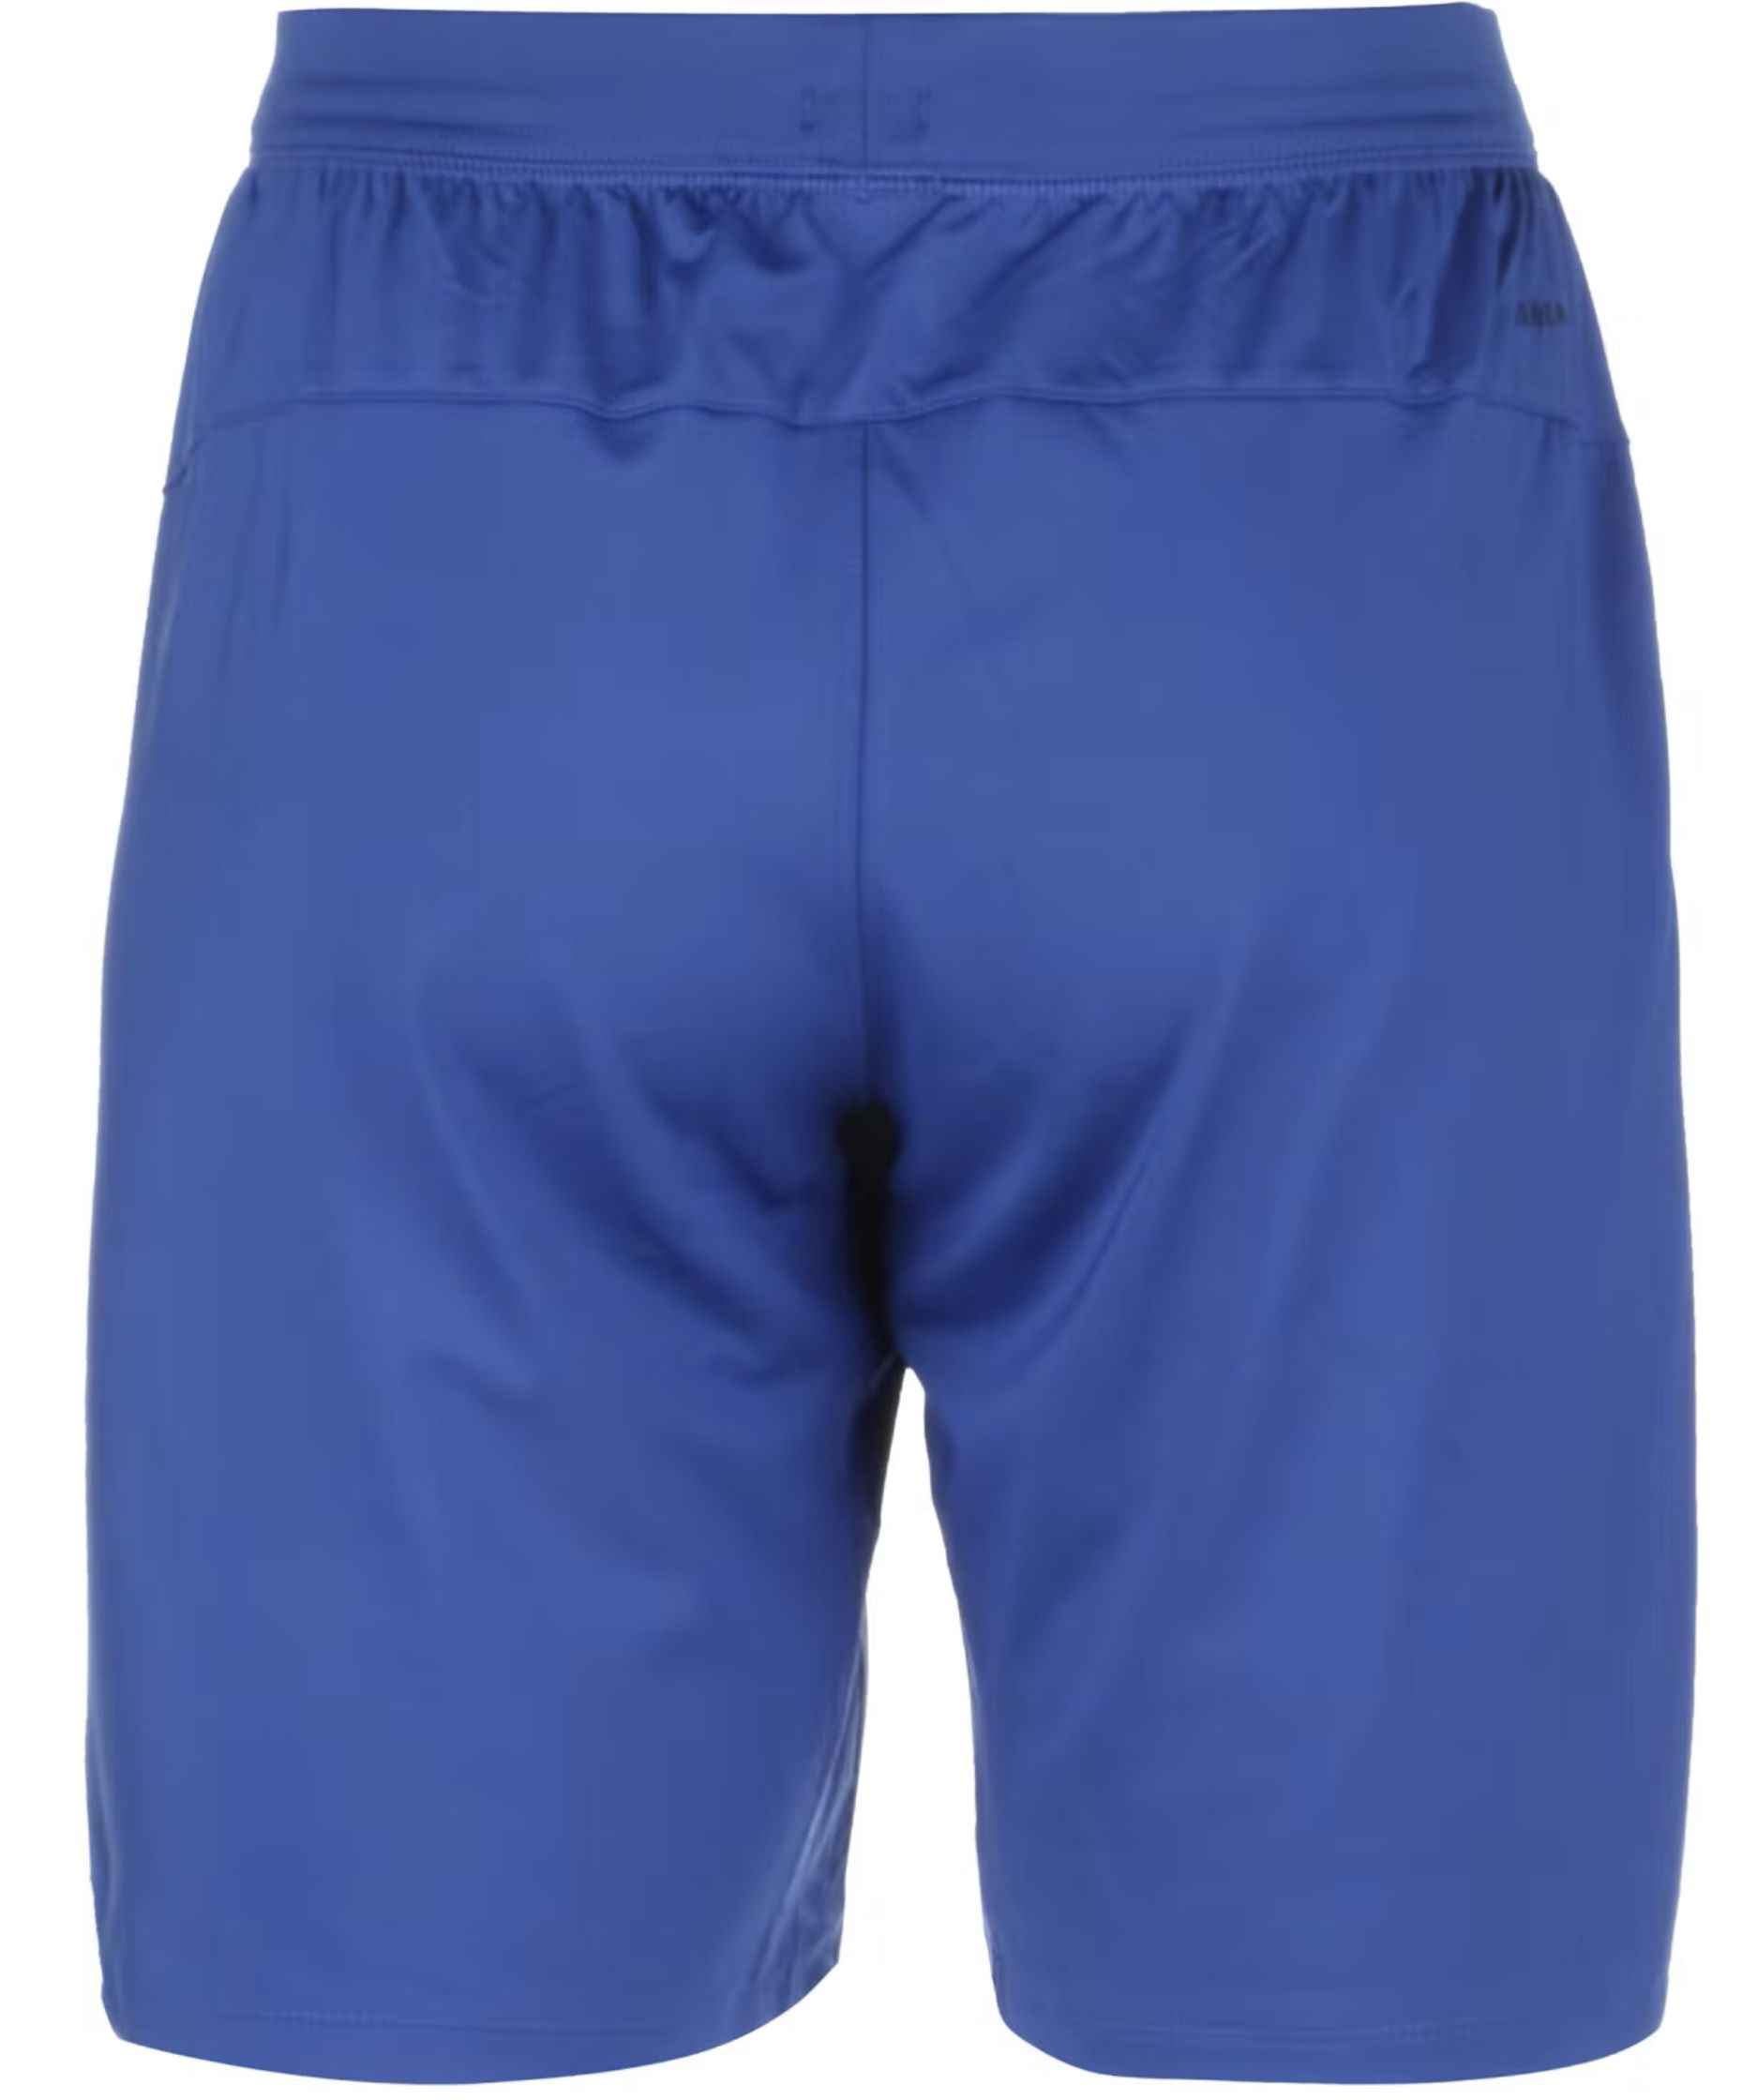 adidas 4K 3 BAR Shorts in Blau für 13,98€ (statt 23€)